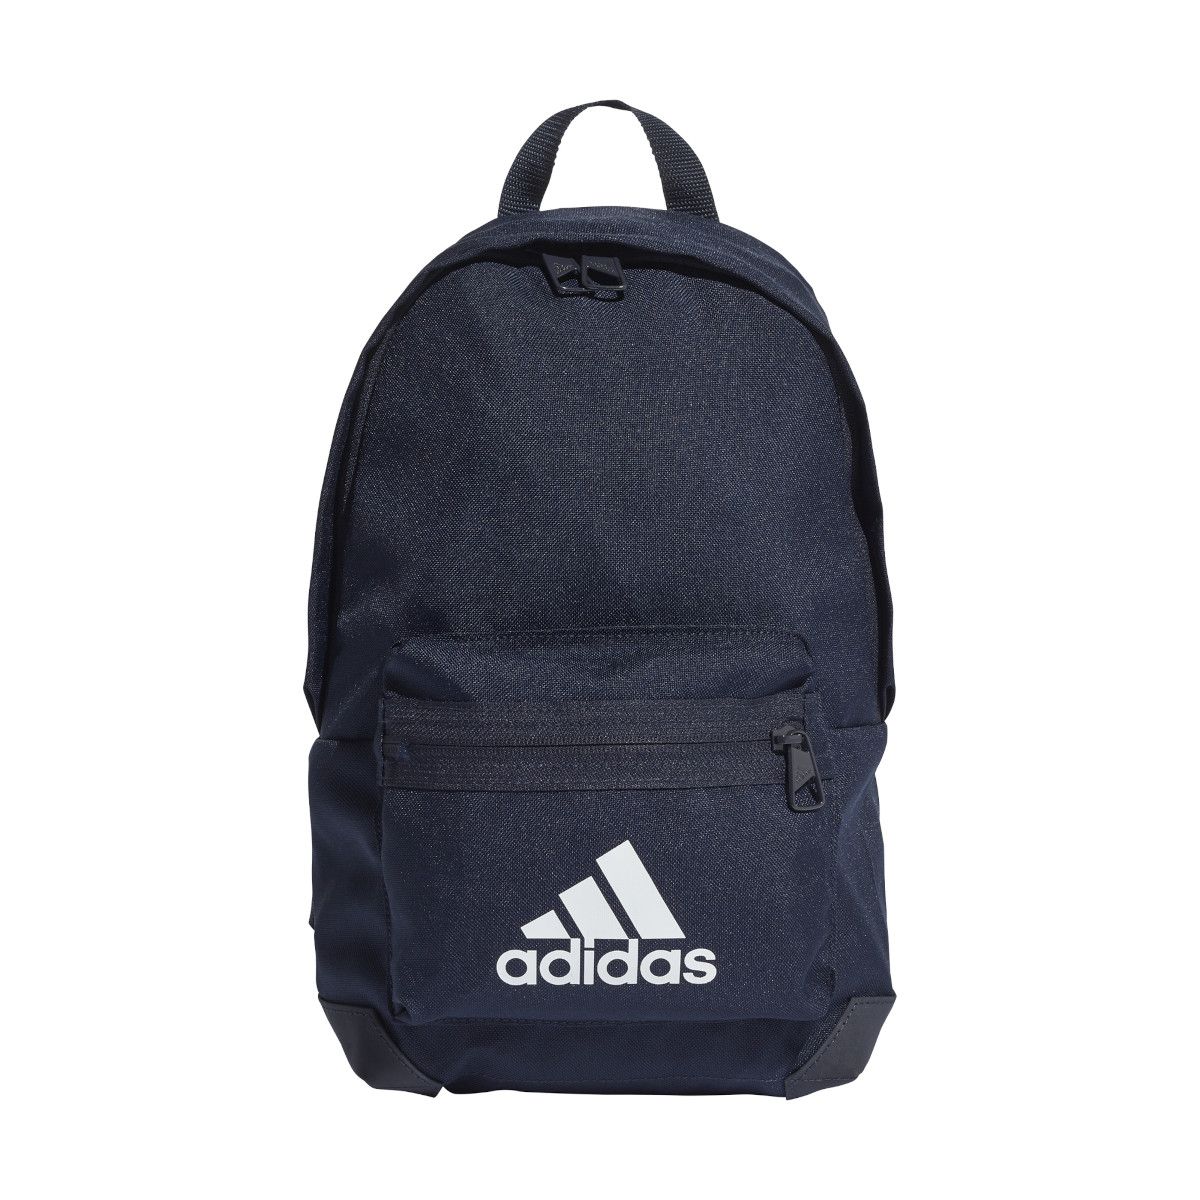 adidas Kids' Backpack H16384